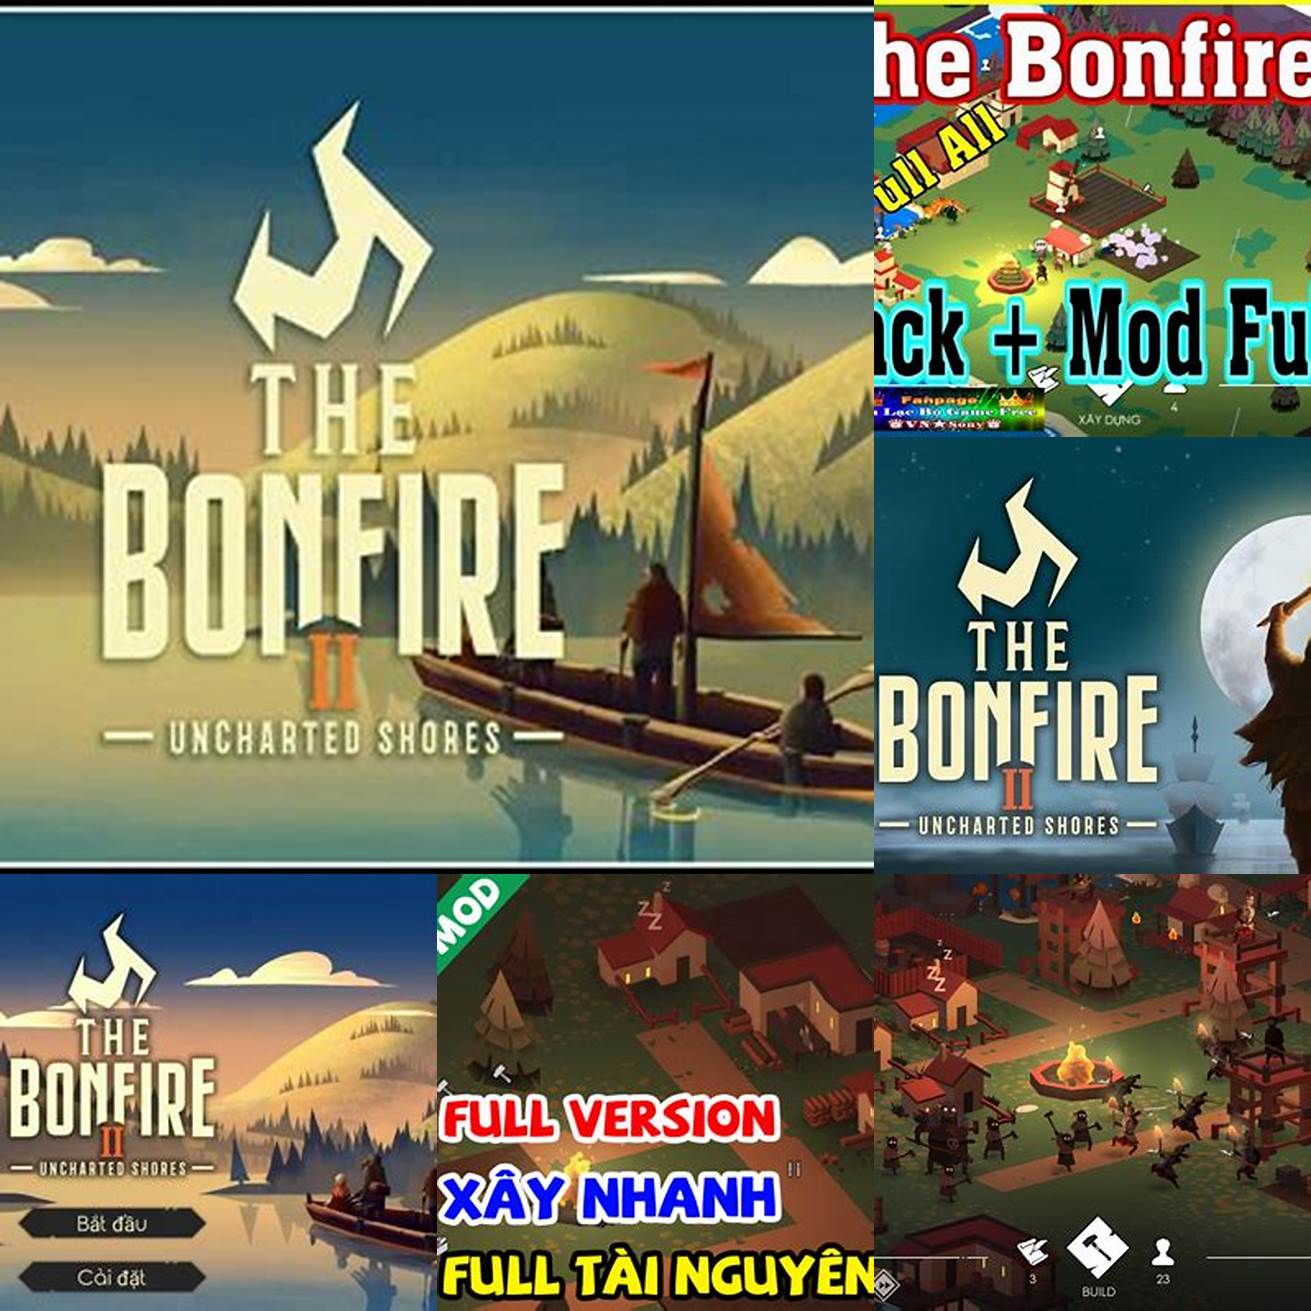 Mainkan The Bonfire 2 Mod Apk